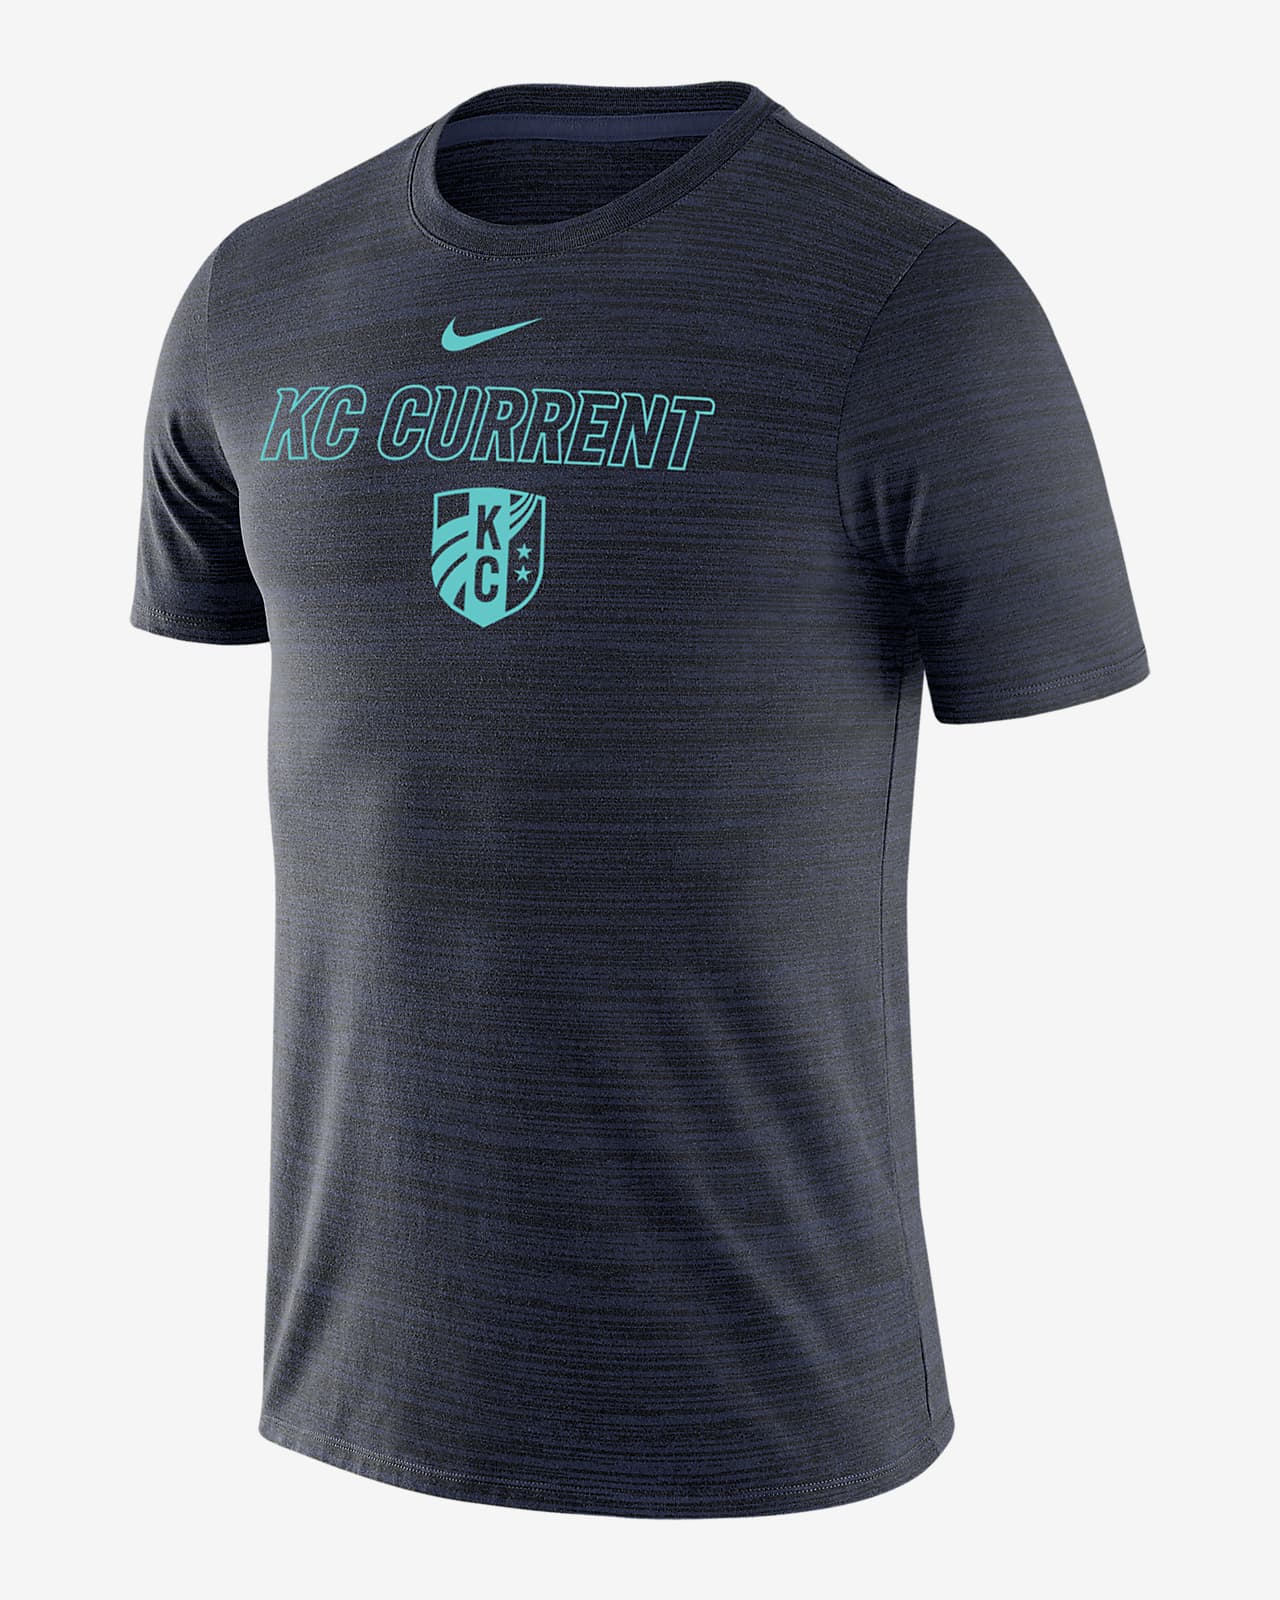 Kansas City Current Velocity Legend Men's Nike Soccer T-Shirt